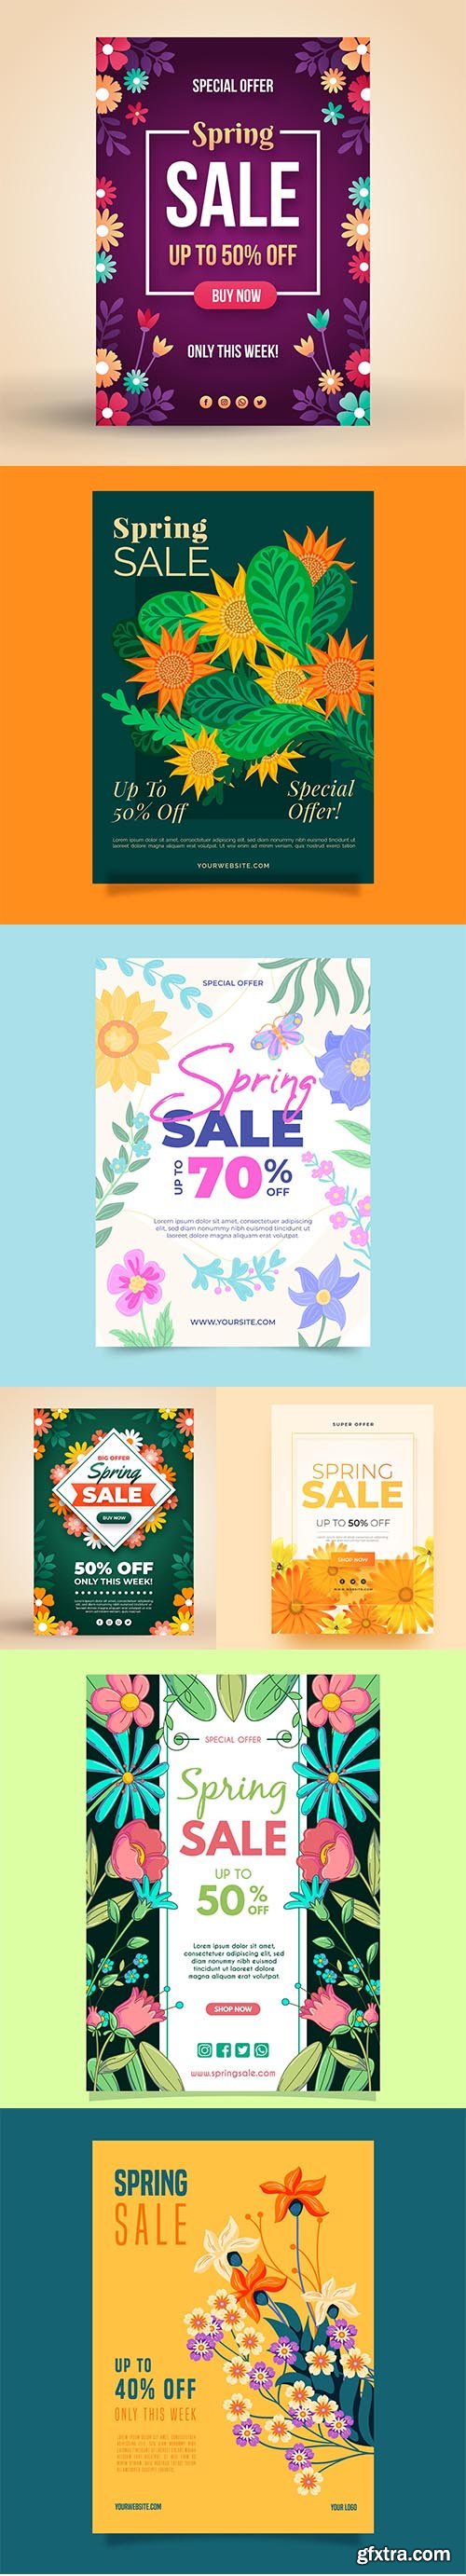 Pretty spring sale flyer template set